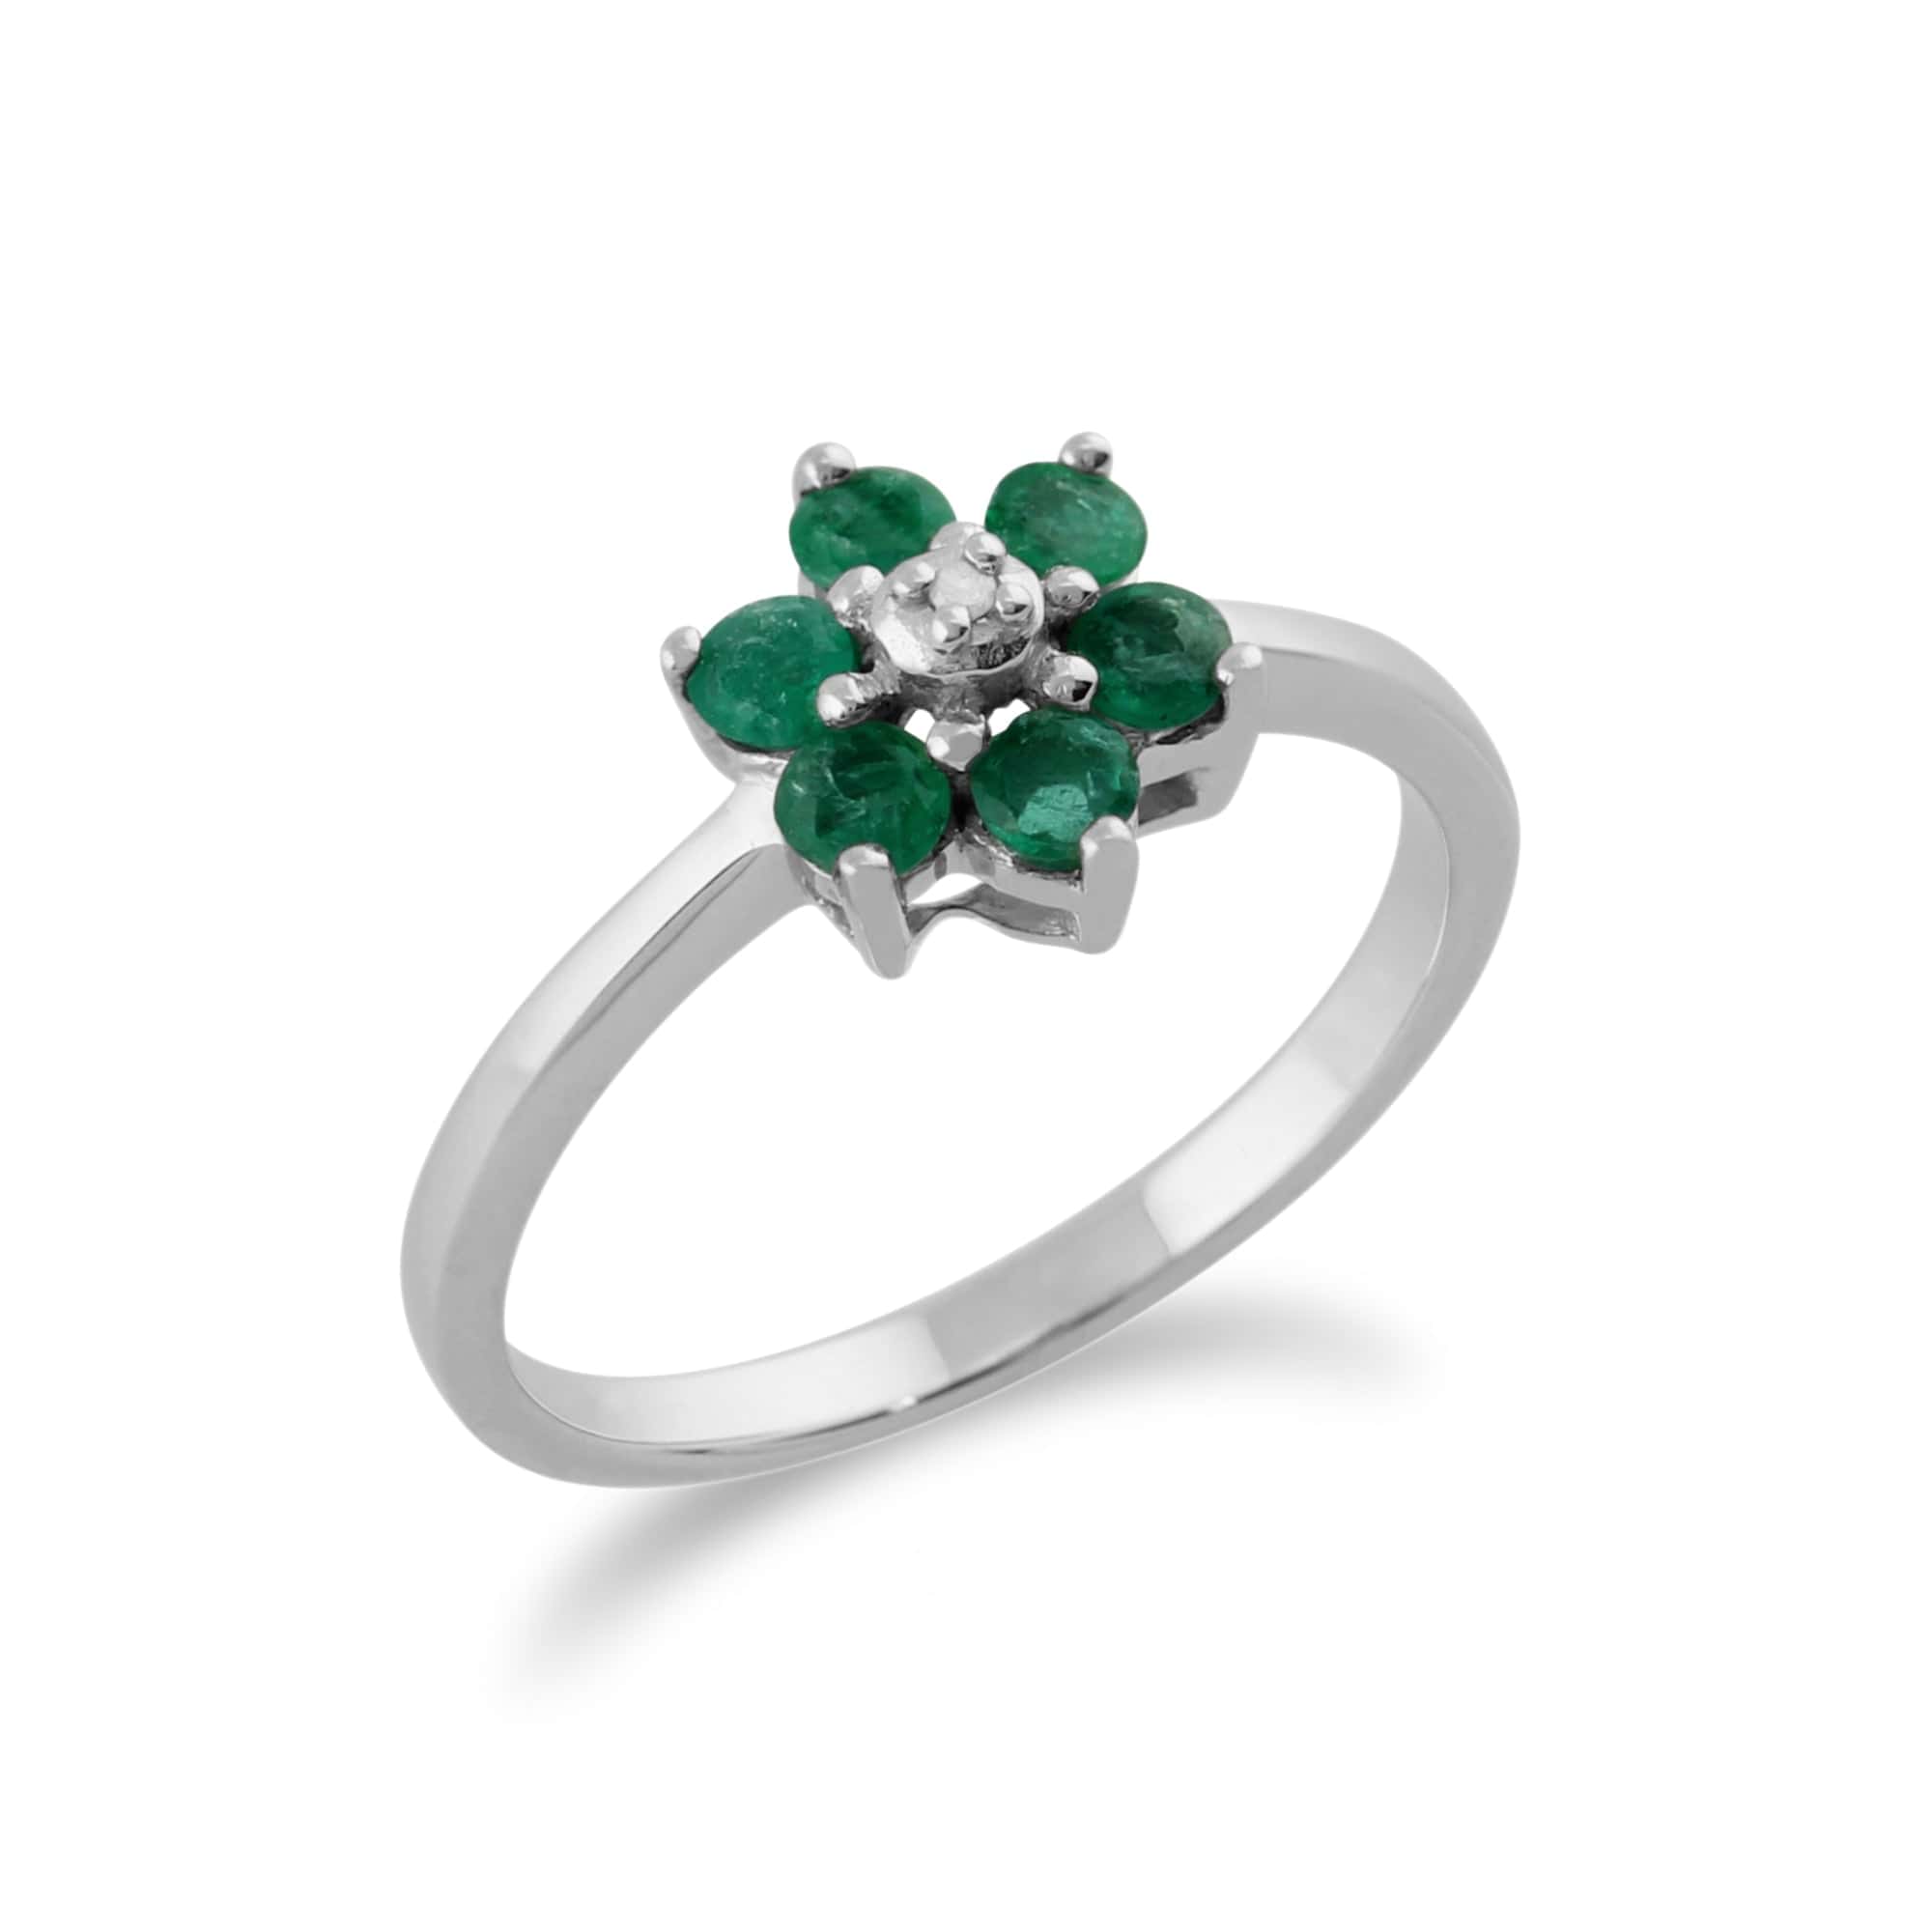 Floral Round Emerald & Diamond Cluster Ring in 9ct White Gold - Gemondo